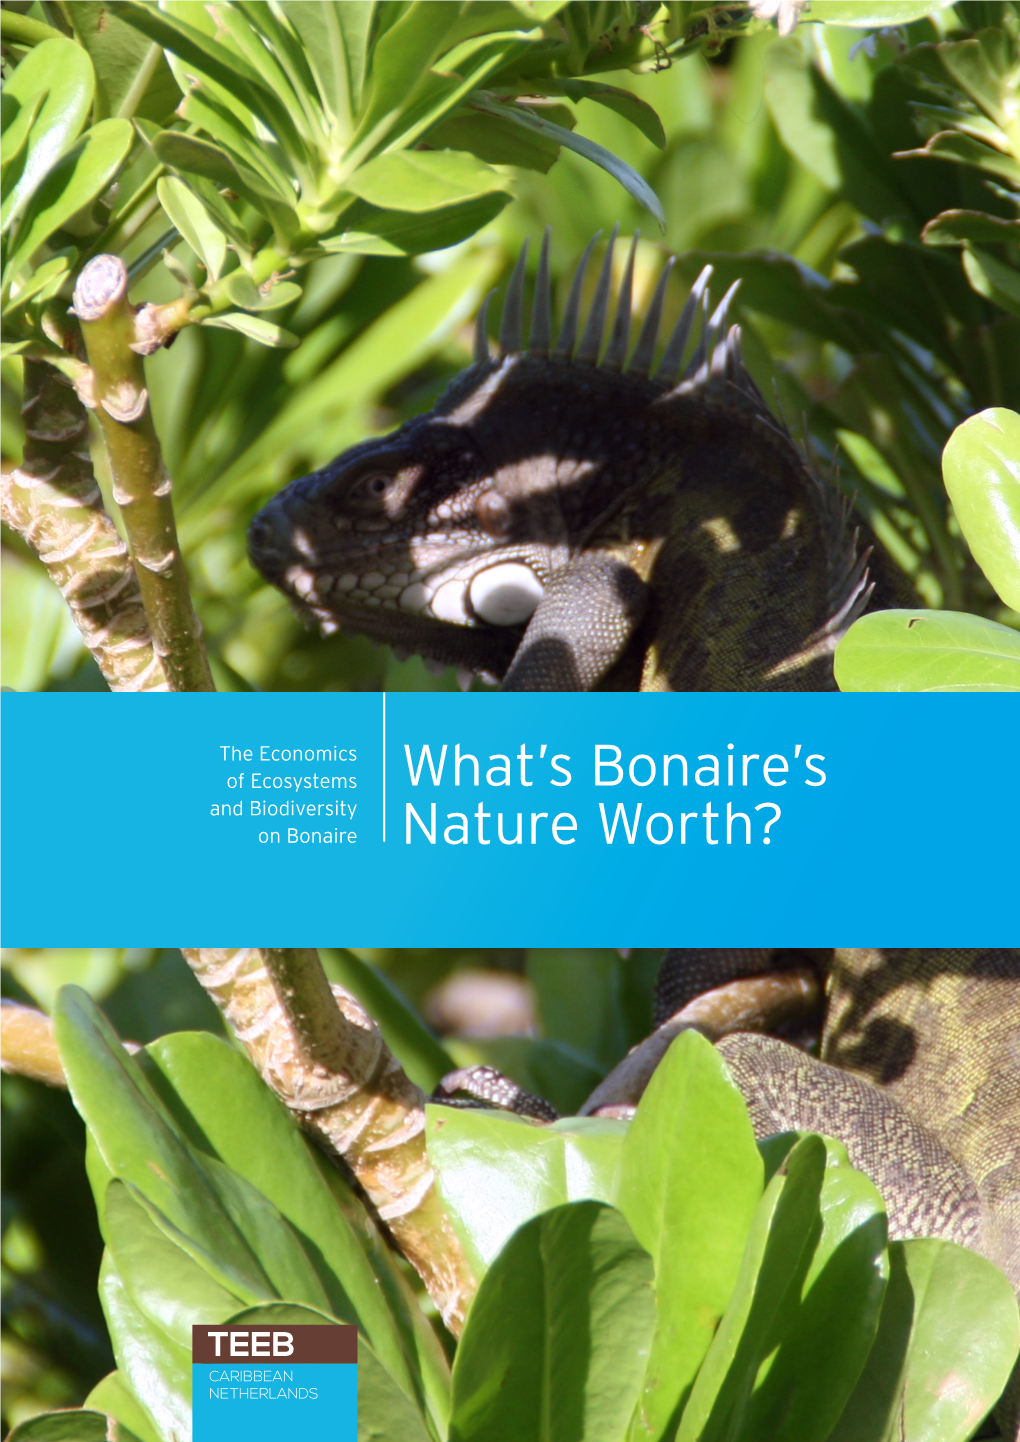 What's Bonaire's Nature Worth?